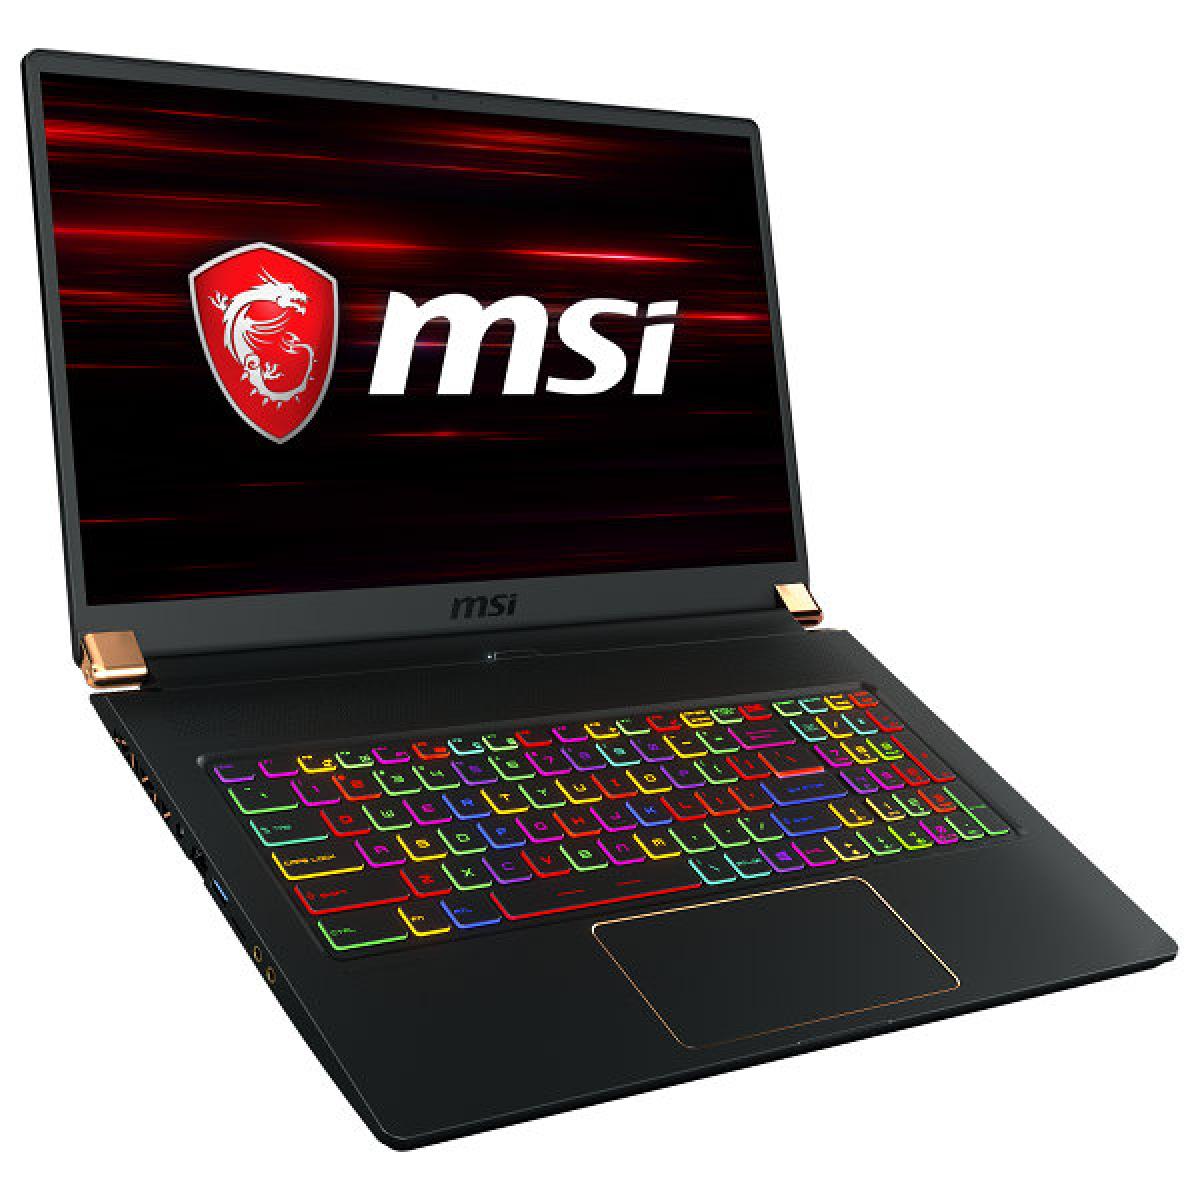 Msi - MSI GS75 Stealth 10SGS-863FR i7-10875 Intel Core i7 - 17.3' - PC Portable Gamer